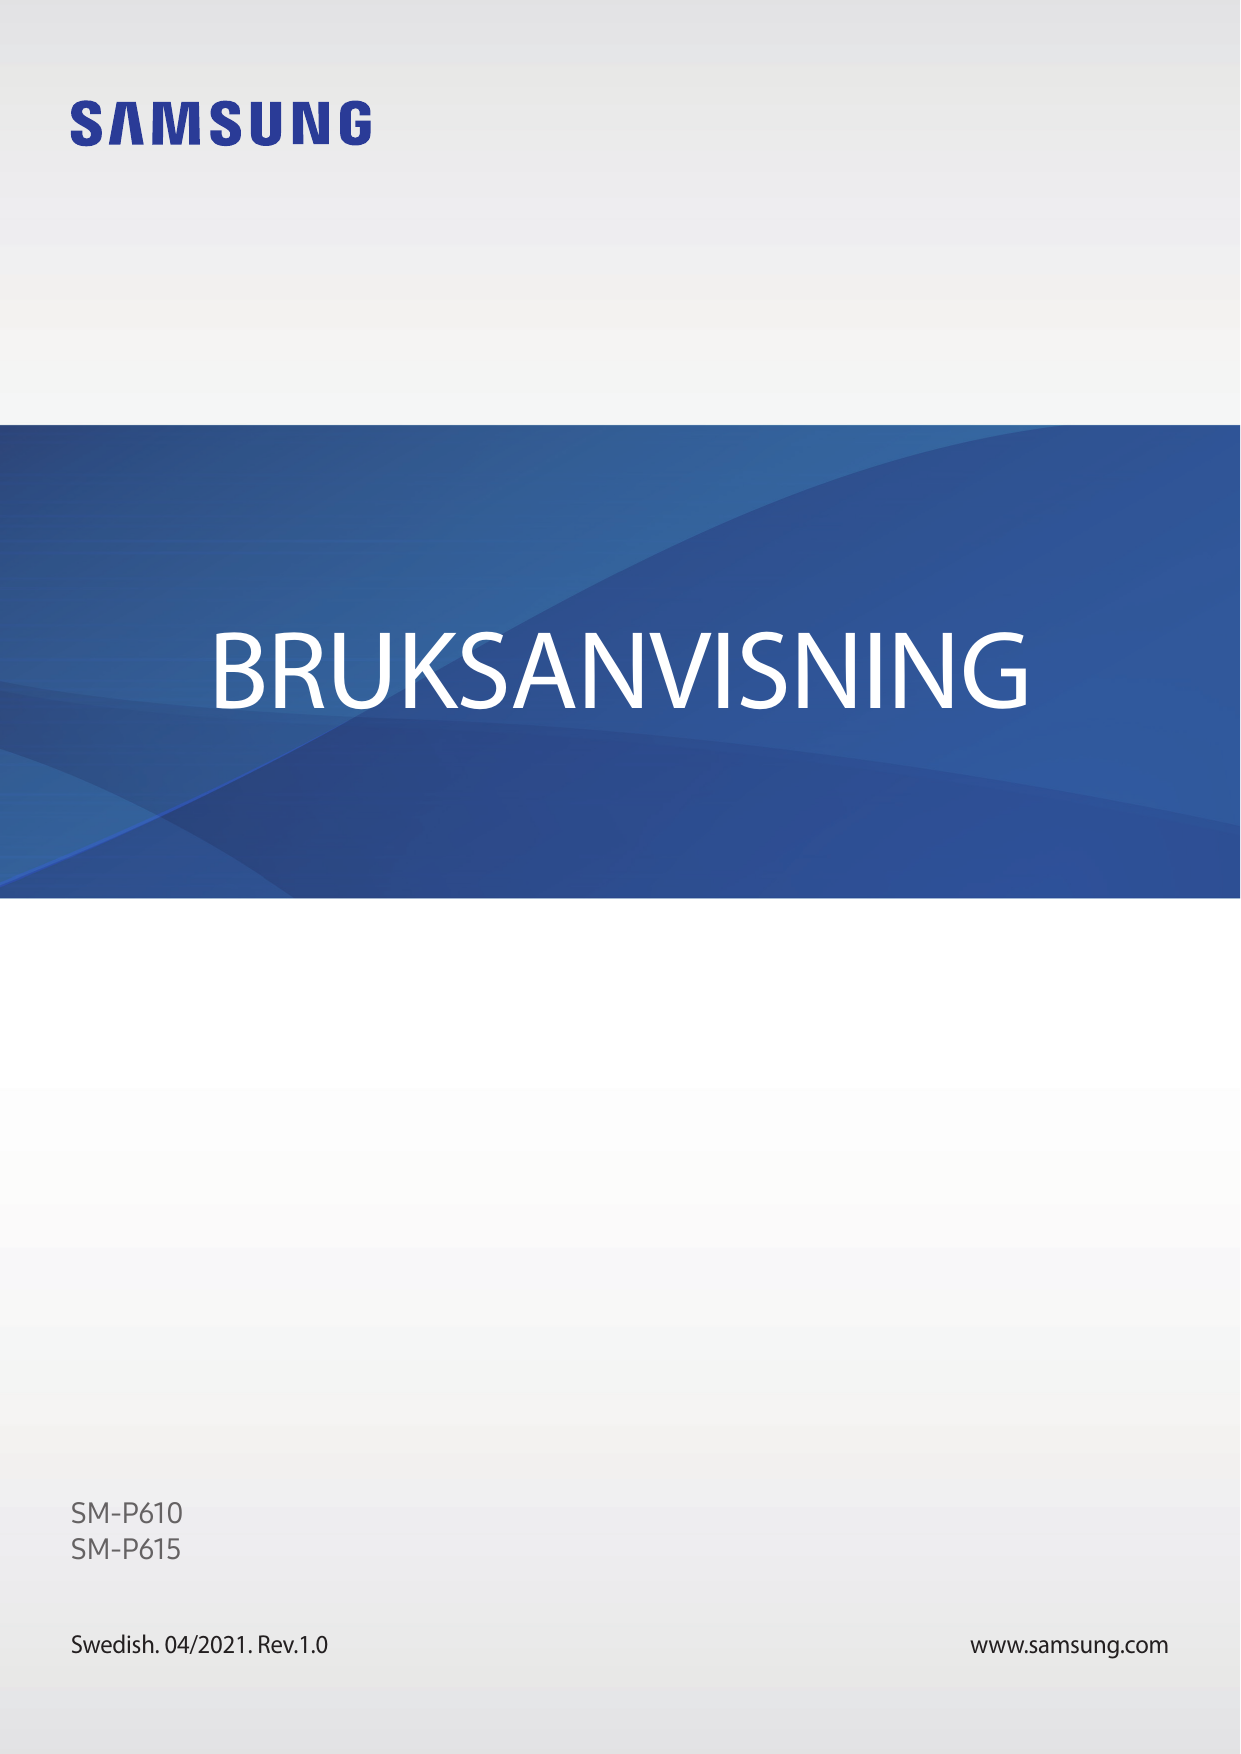 BRUKSANVISNINGSM-P610SM-P615Swedish. 04/2021. Rev.1.0www.samsung.com